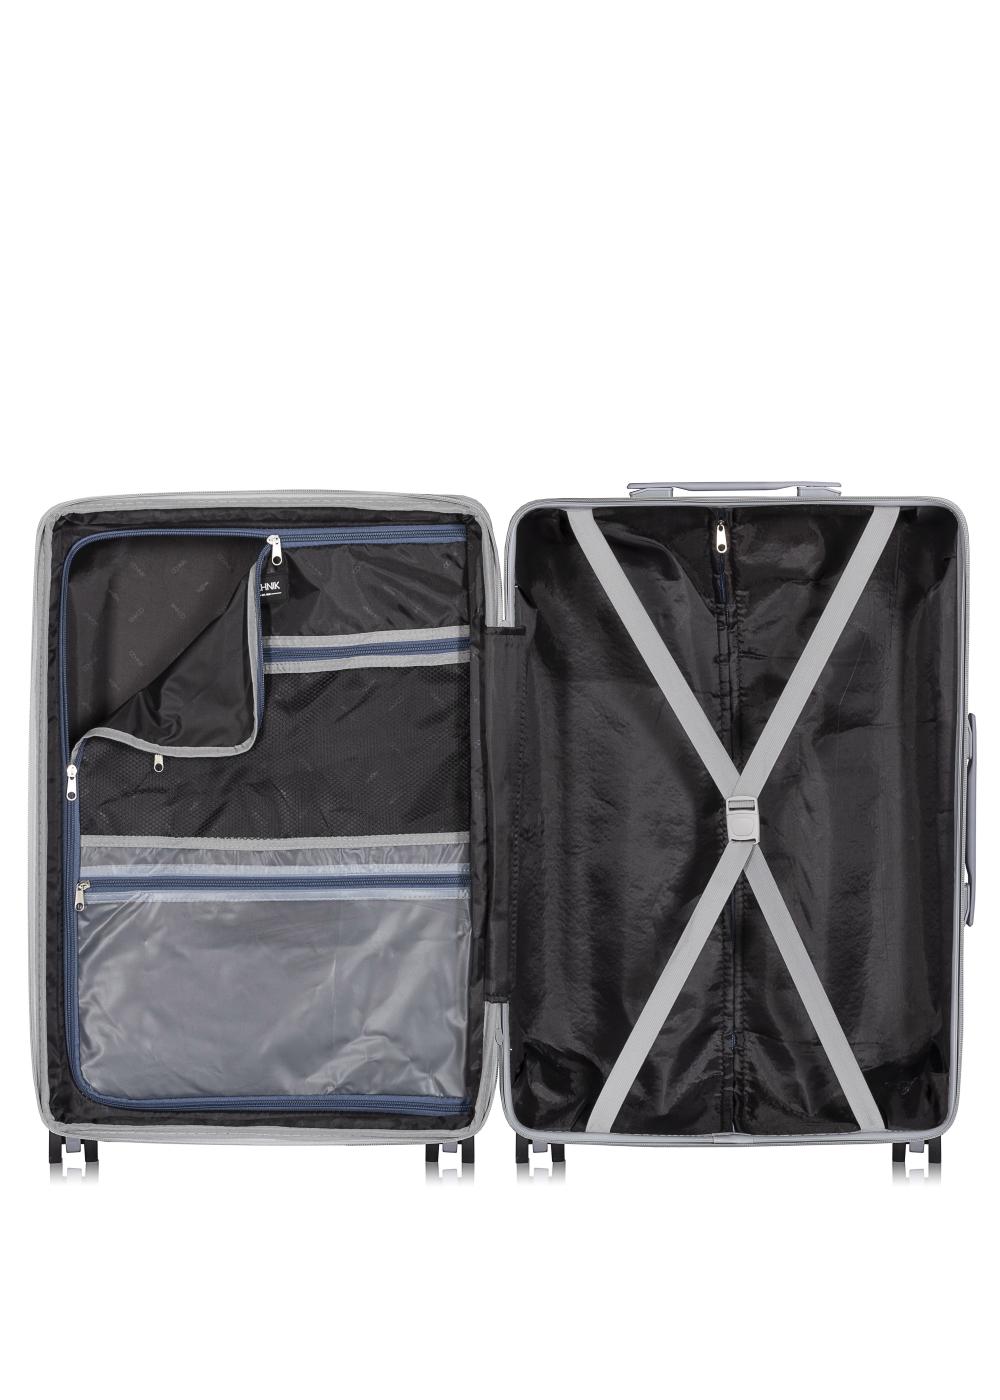 Duża walizka na kółkach WALAB-0026-61-28